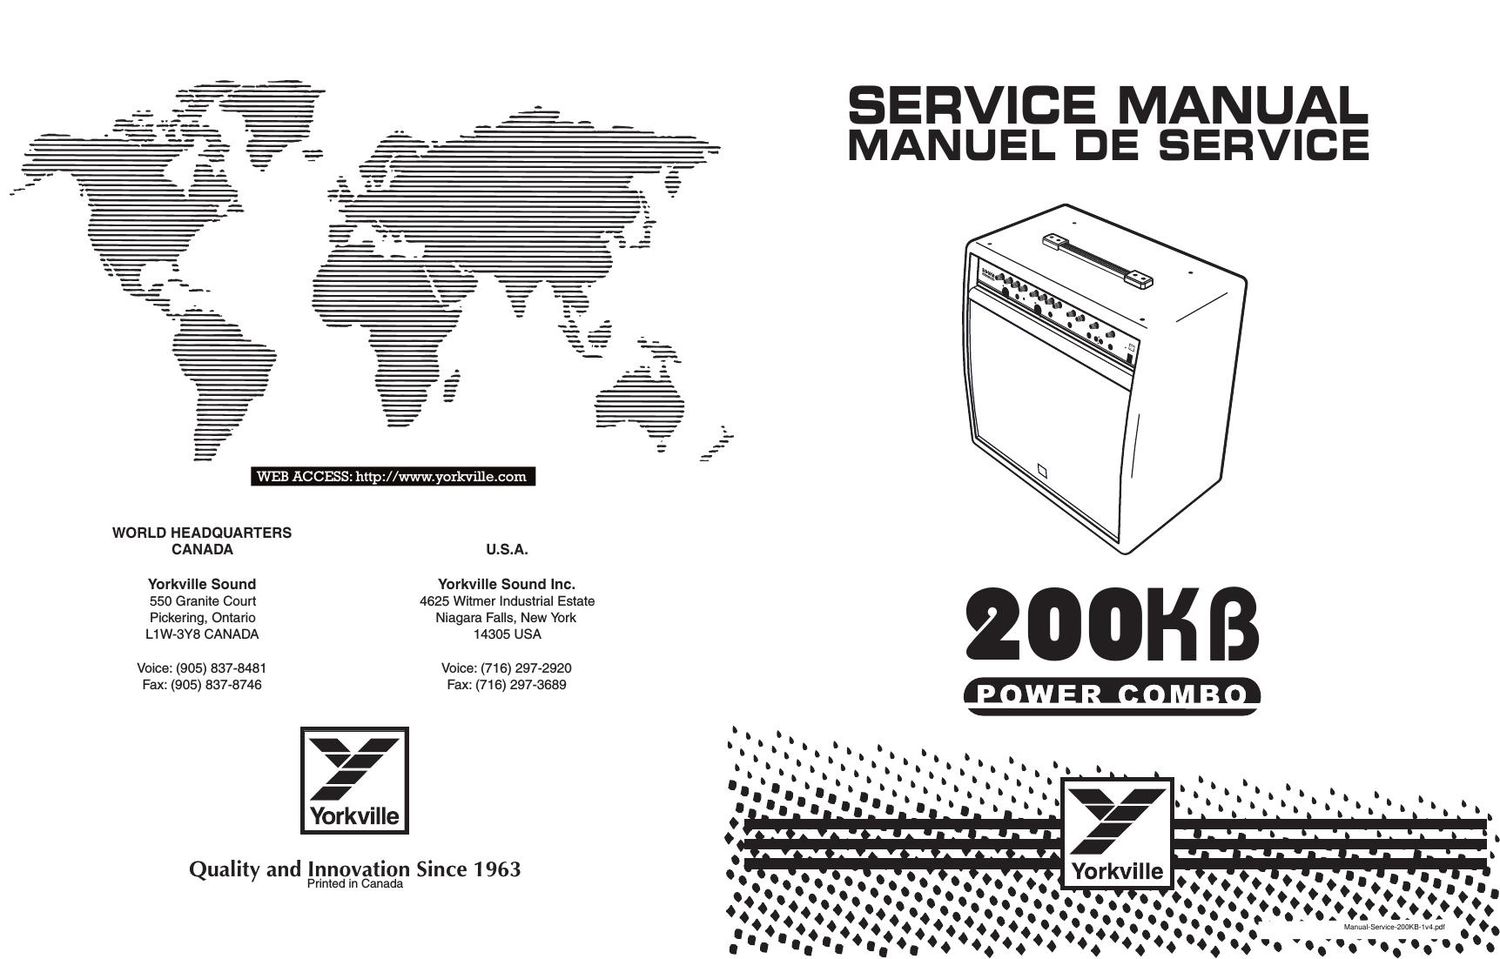 Yorkville 200KB Power Combo Service Manual